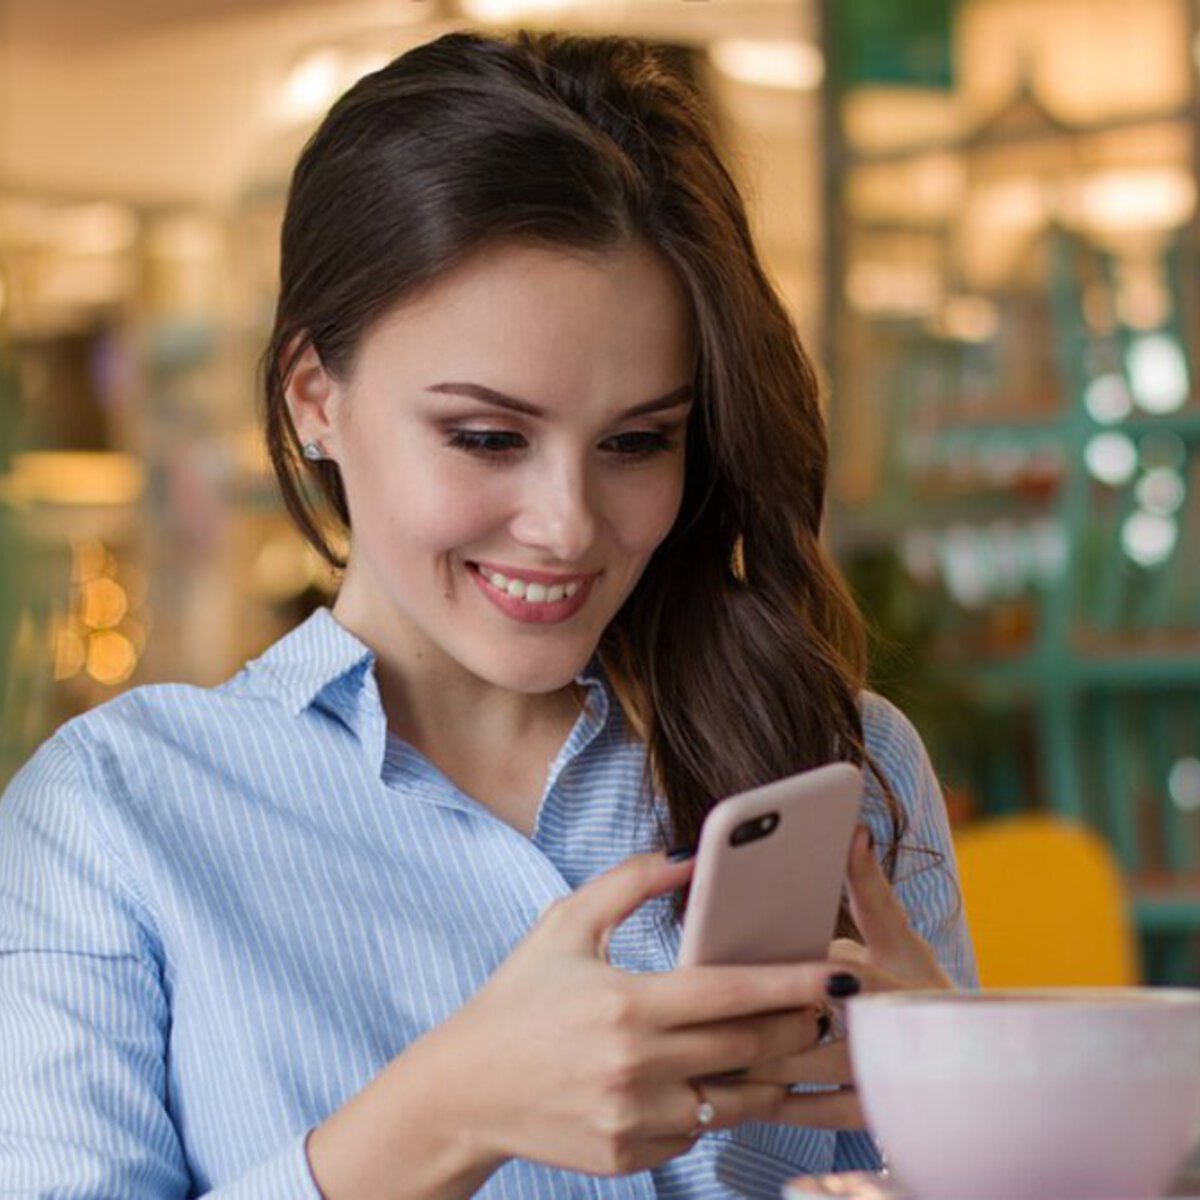 Online dating apps: The worst Tinder pick-up lines revealed